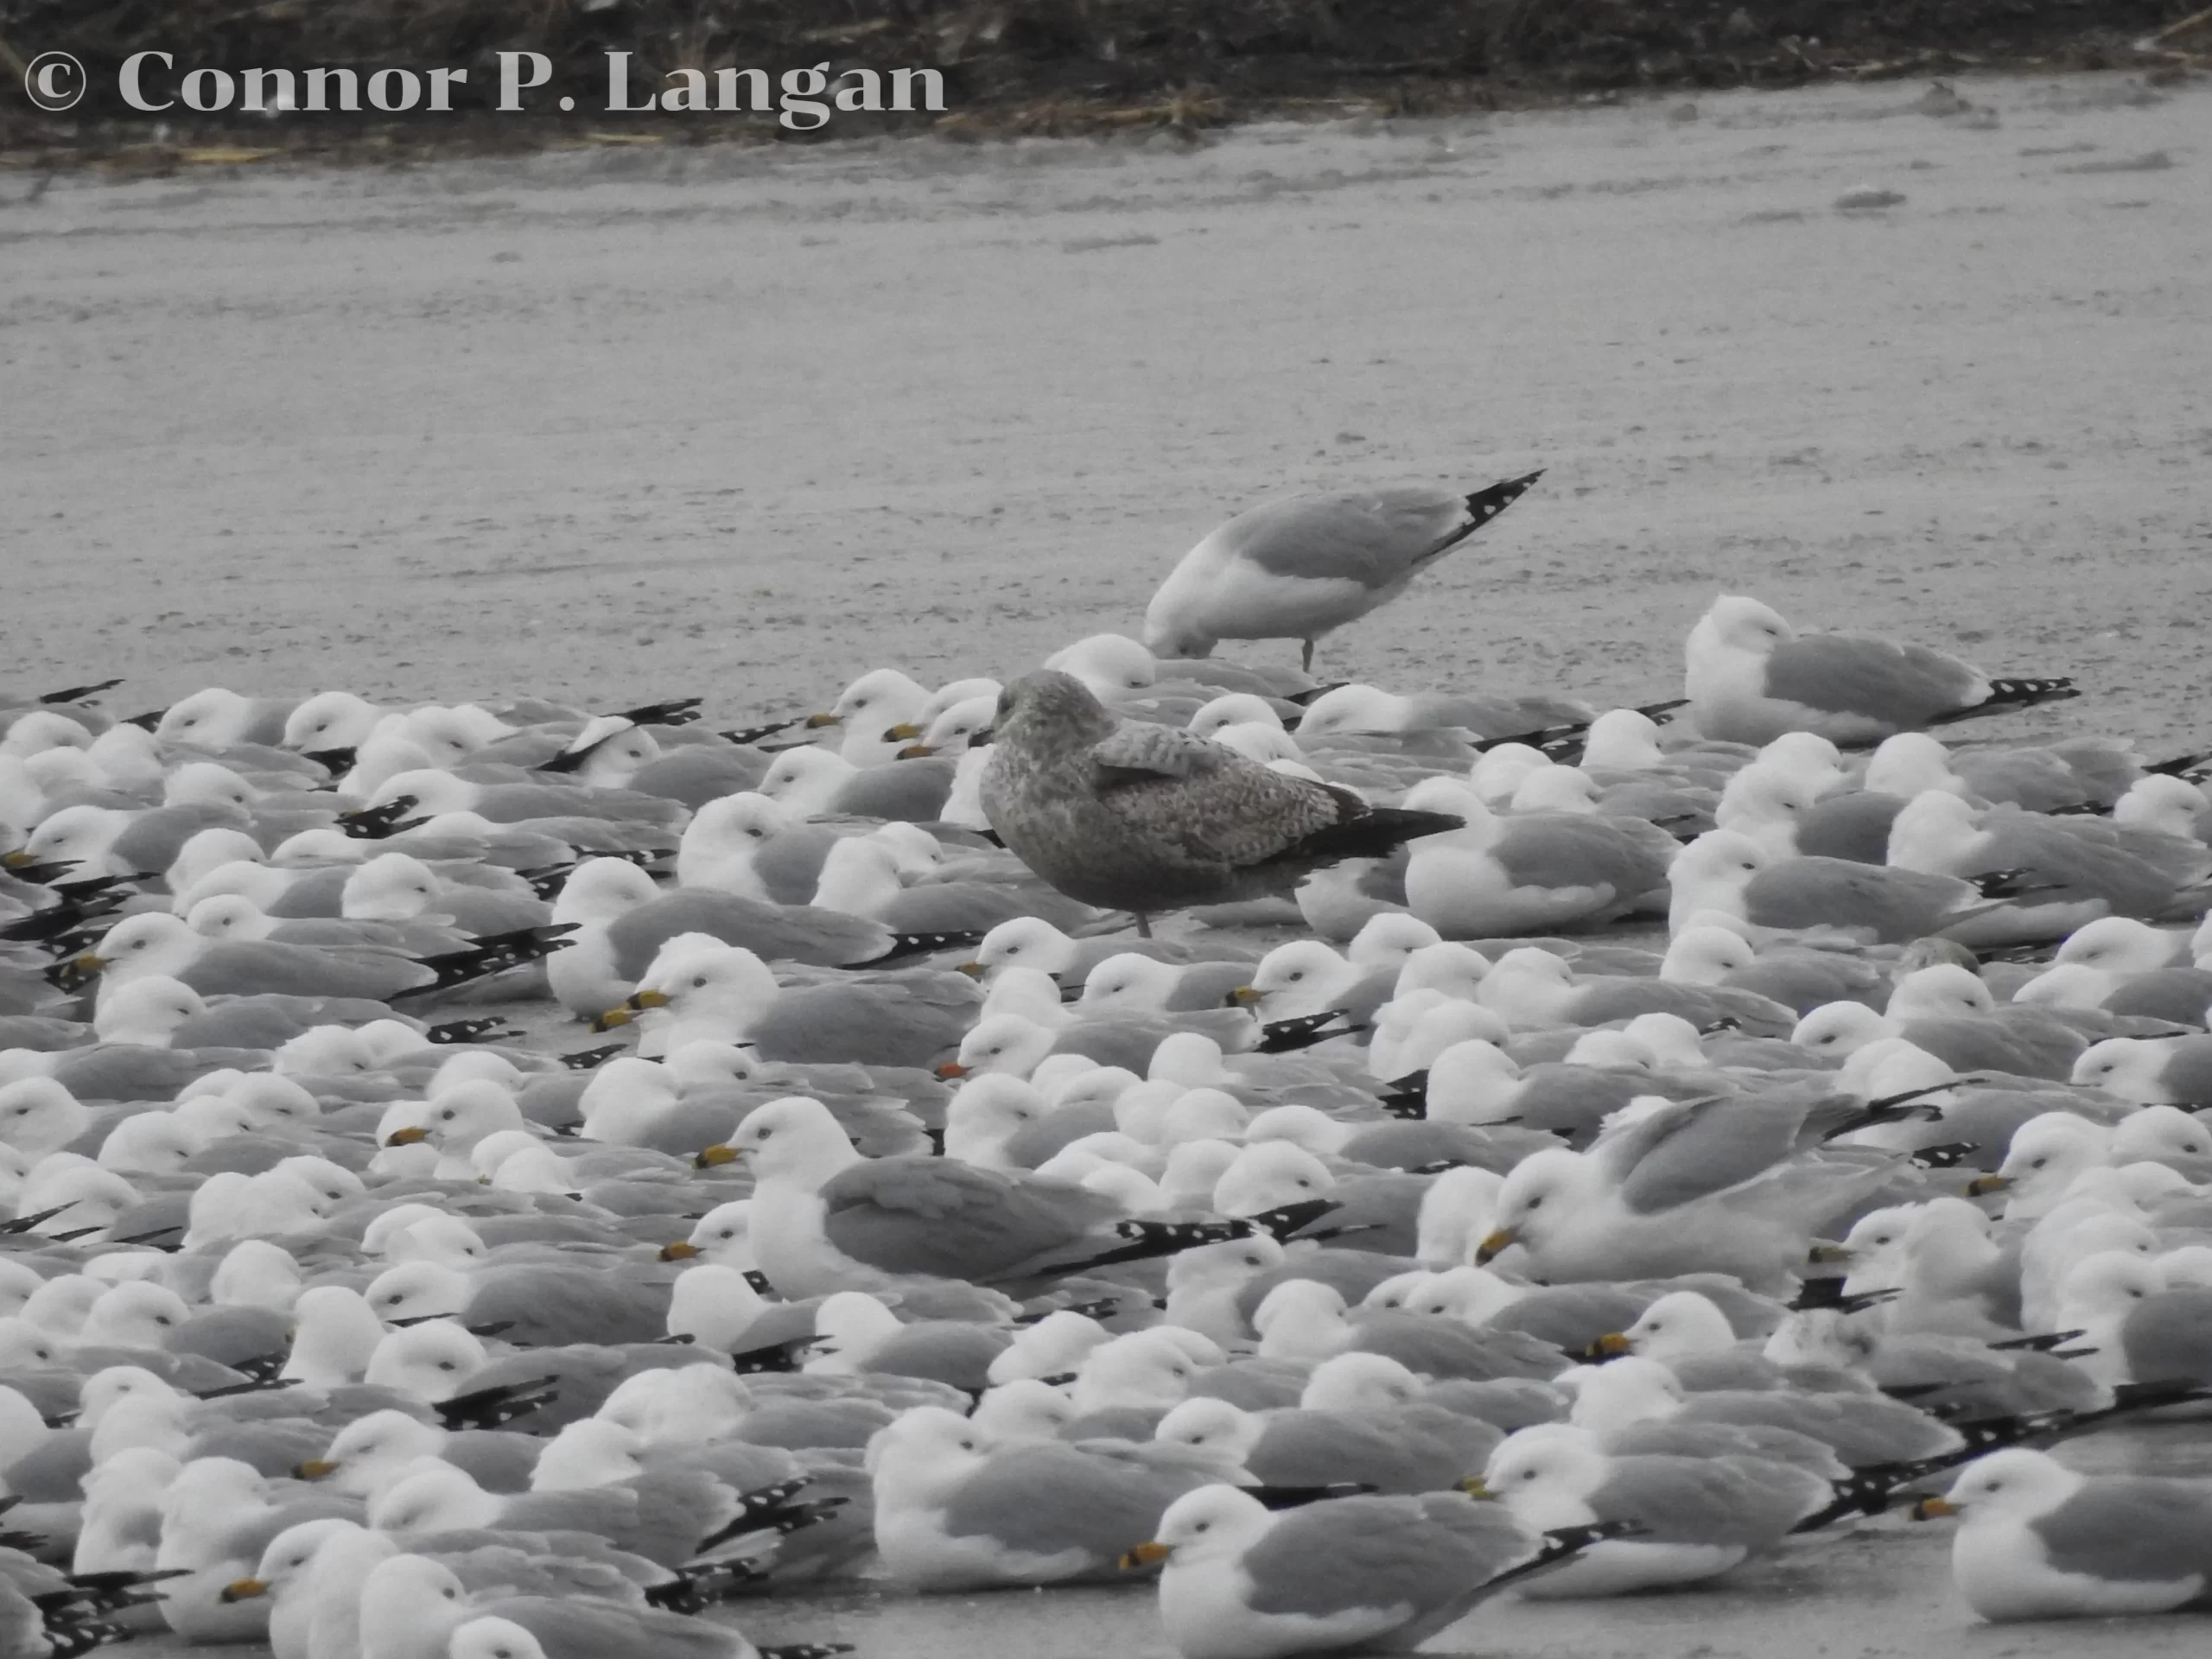 Where do seagulls sleep? Well, this photo features seagulls sleeping on ice.